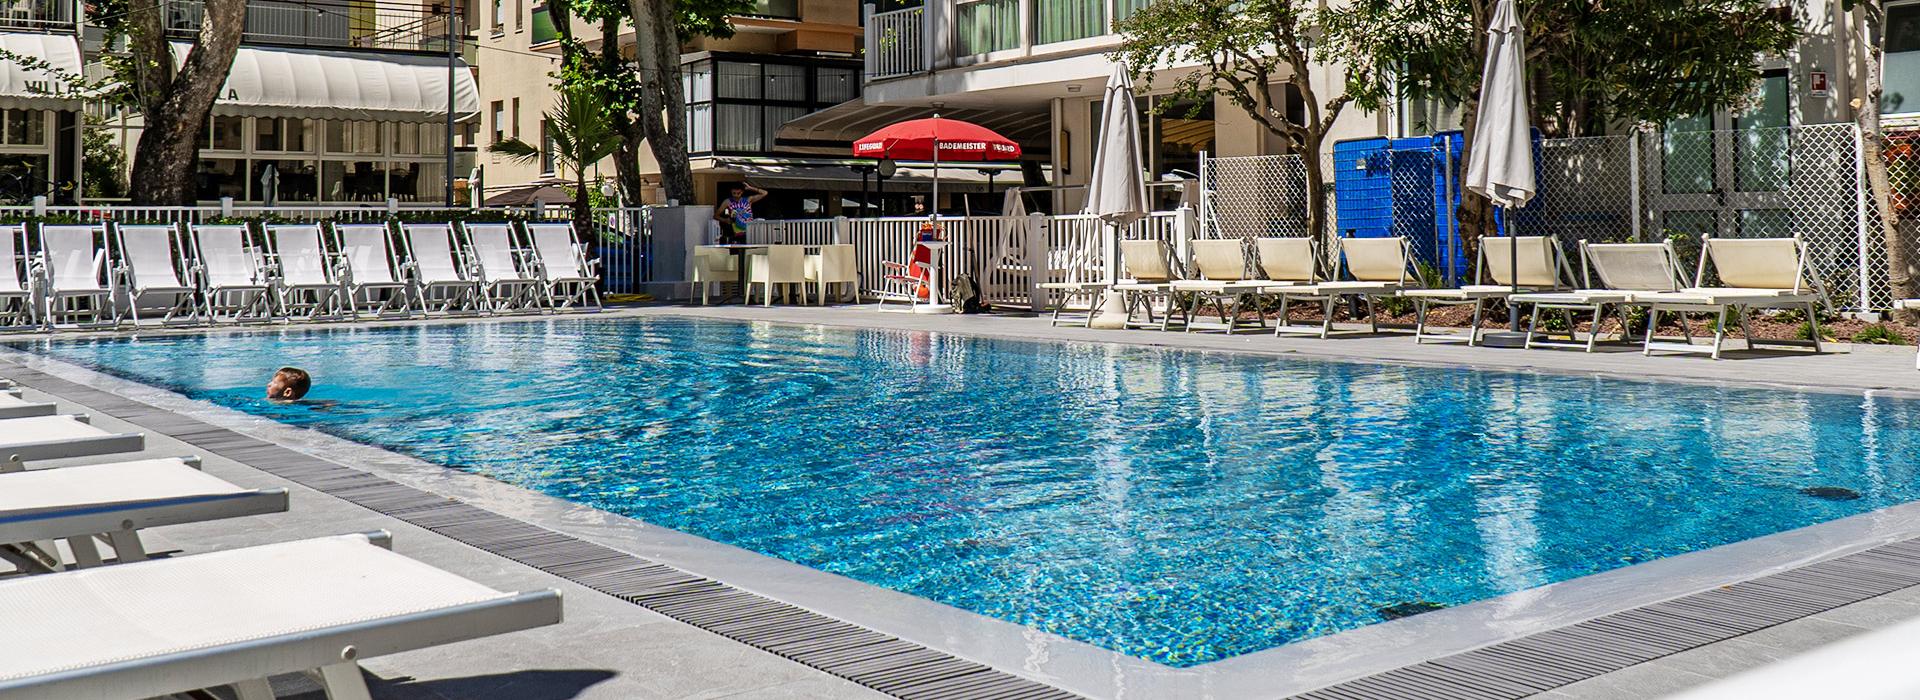 hotelaiglonrimini de pool-hotel-rimini 012